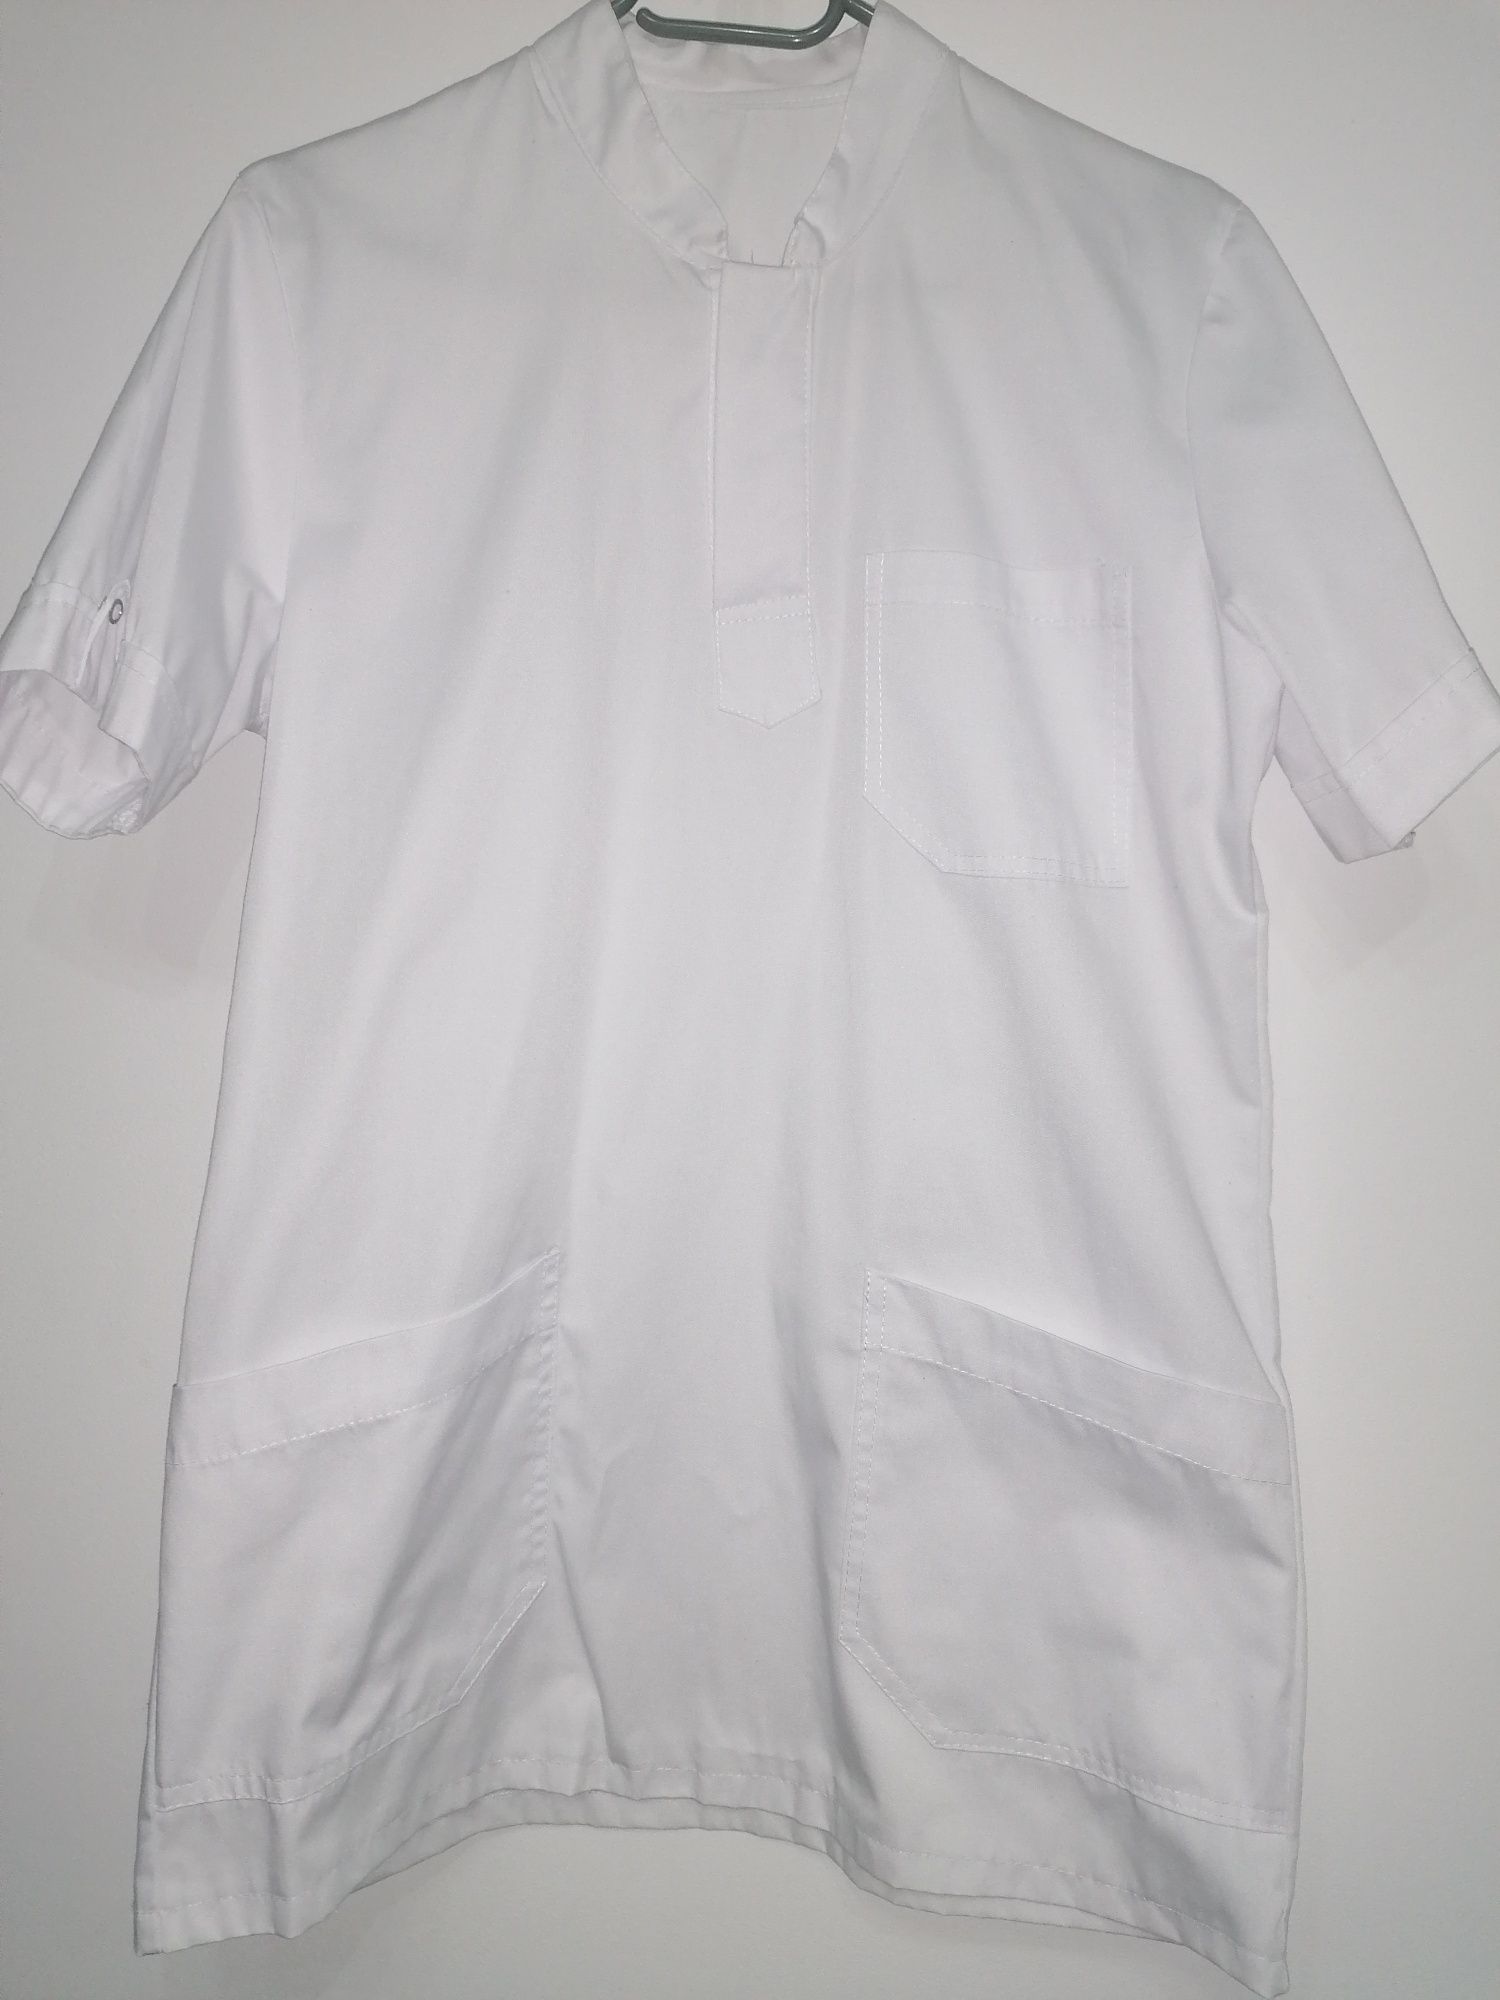 Bluza medicala tunica Inotex S, pantaloni medicali albi